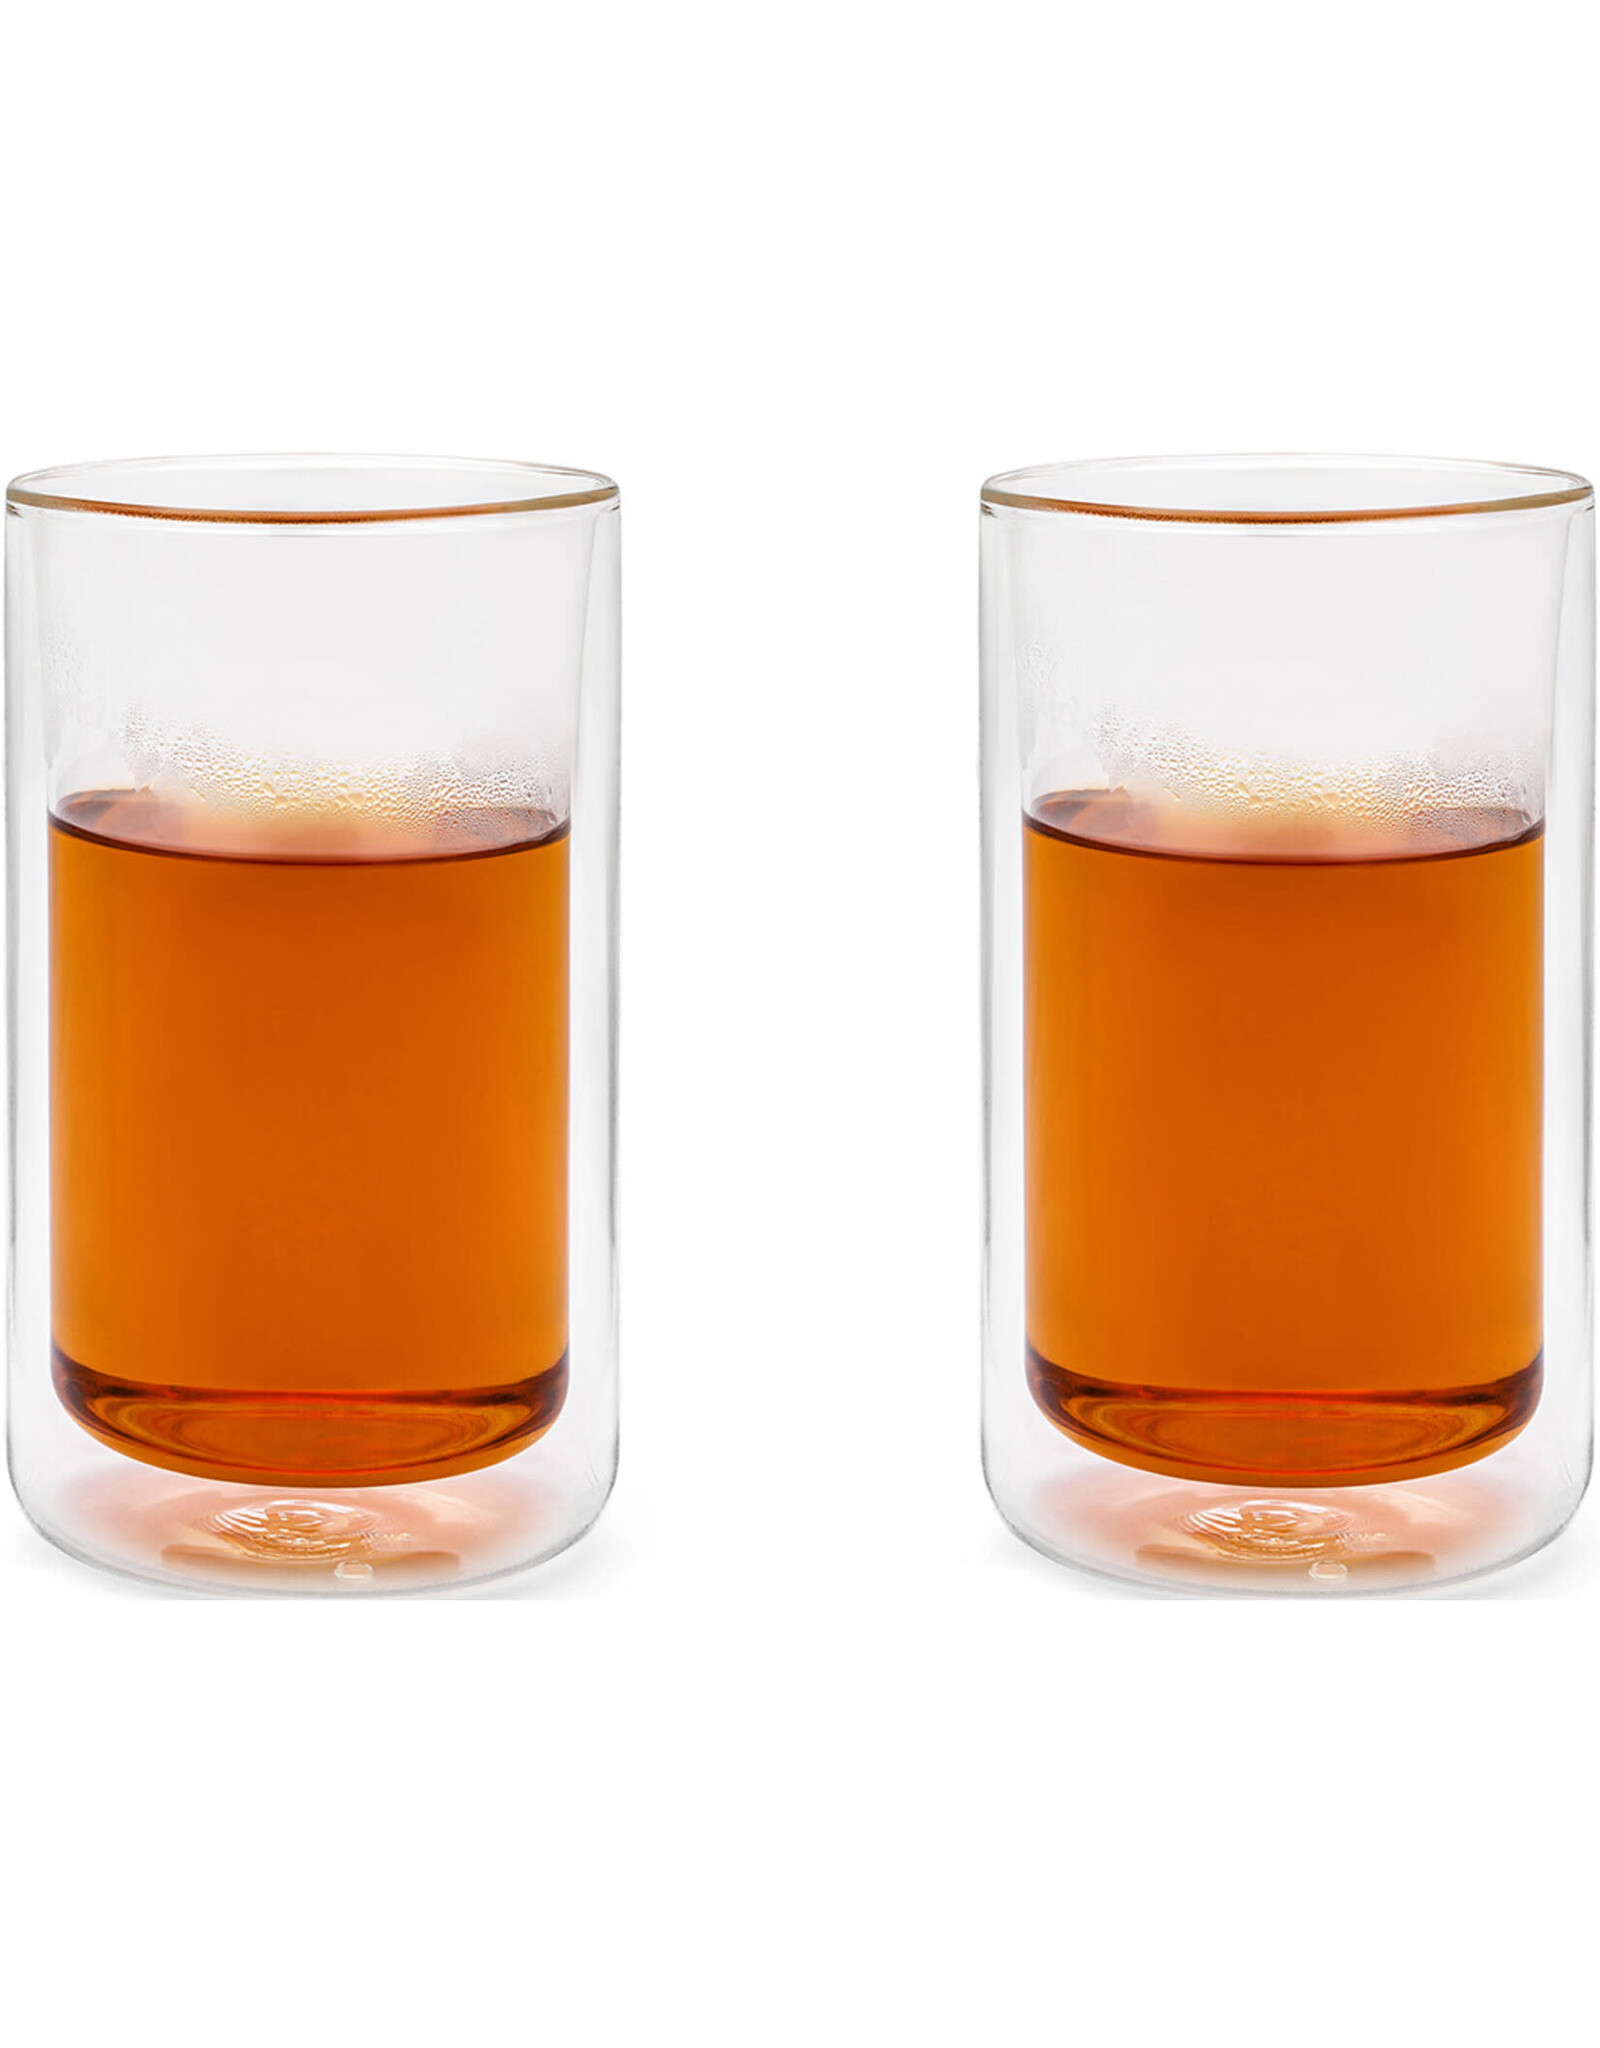 bredemeijer Bredemeijer Dubbelwandig glas San Remo 400 ml, 2 stuks